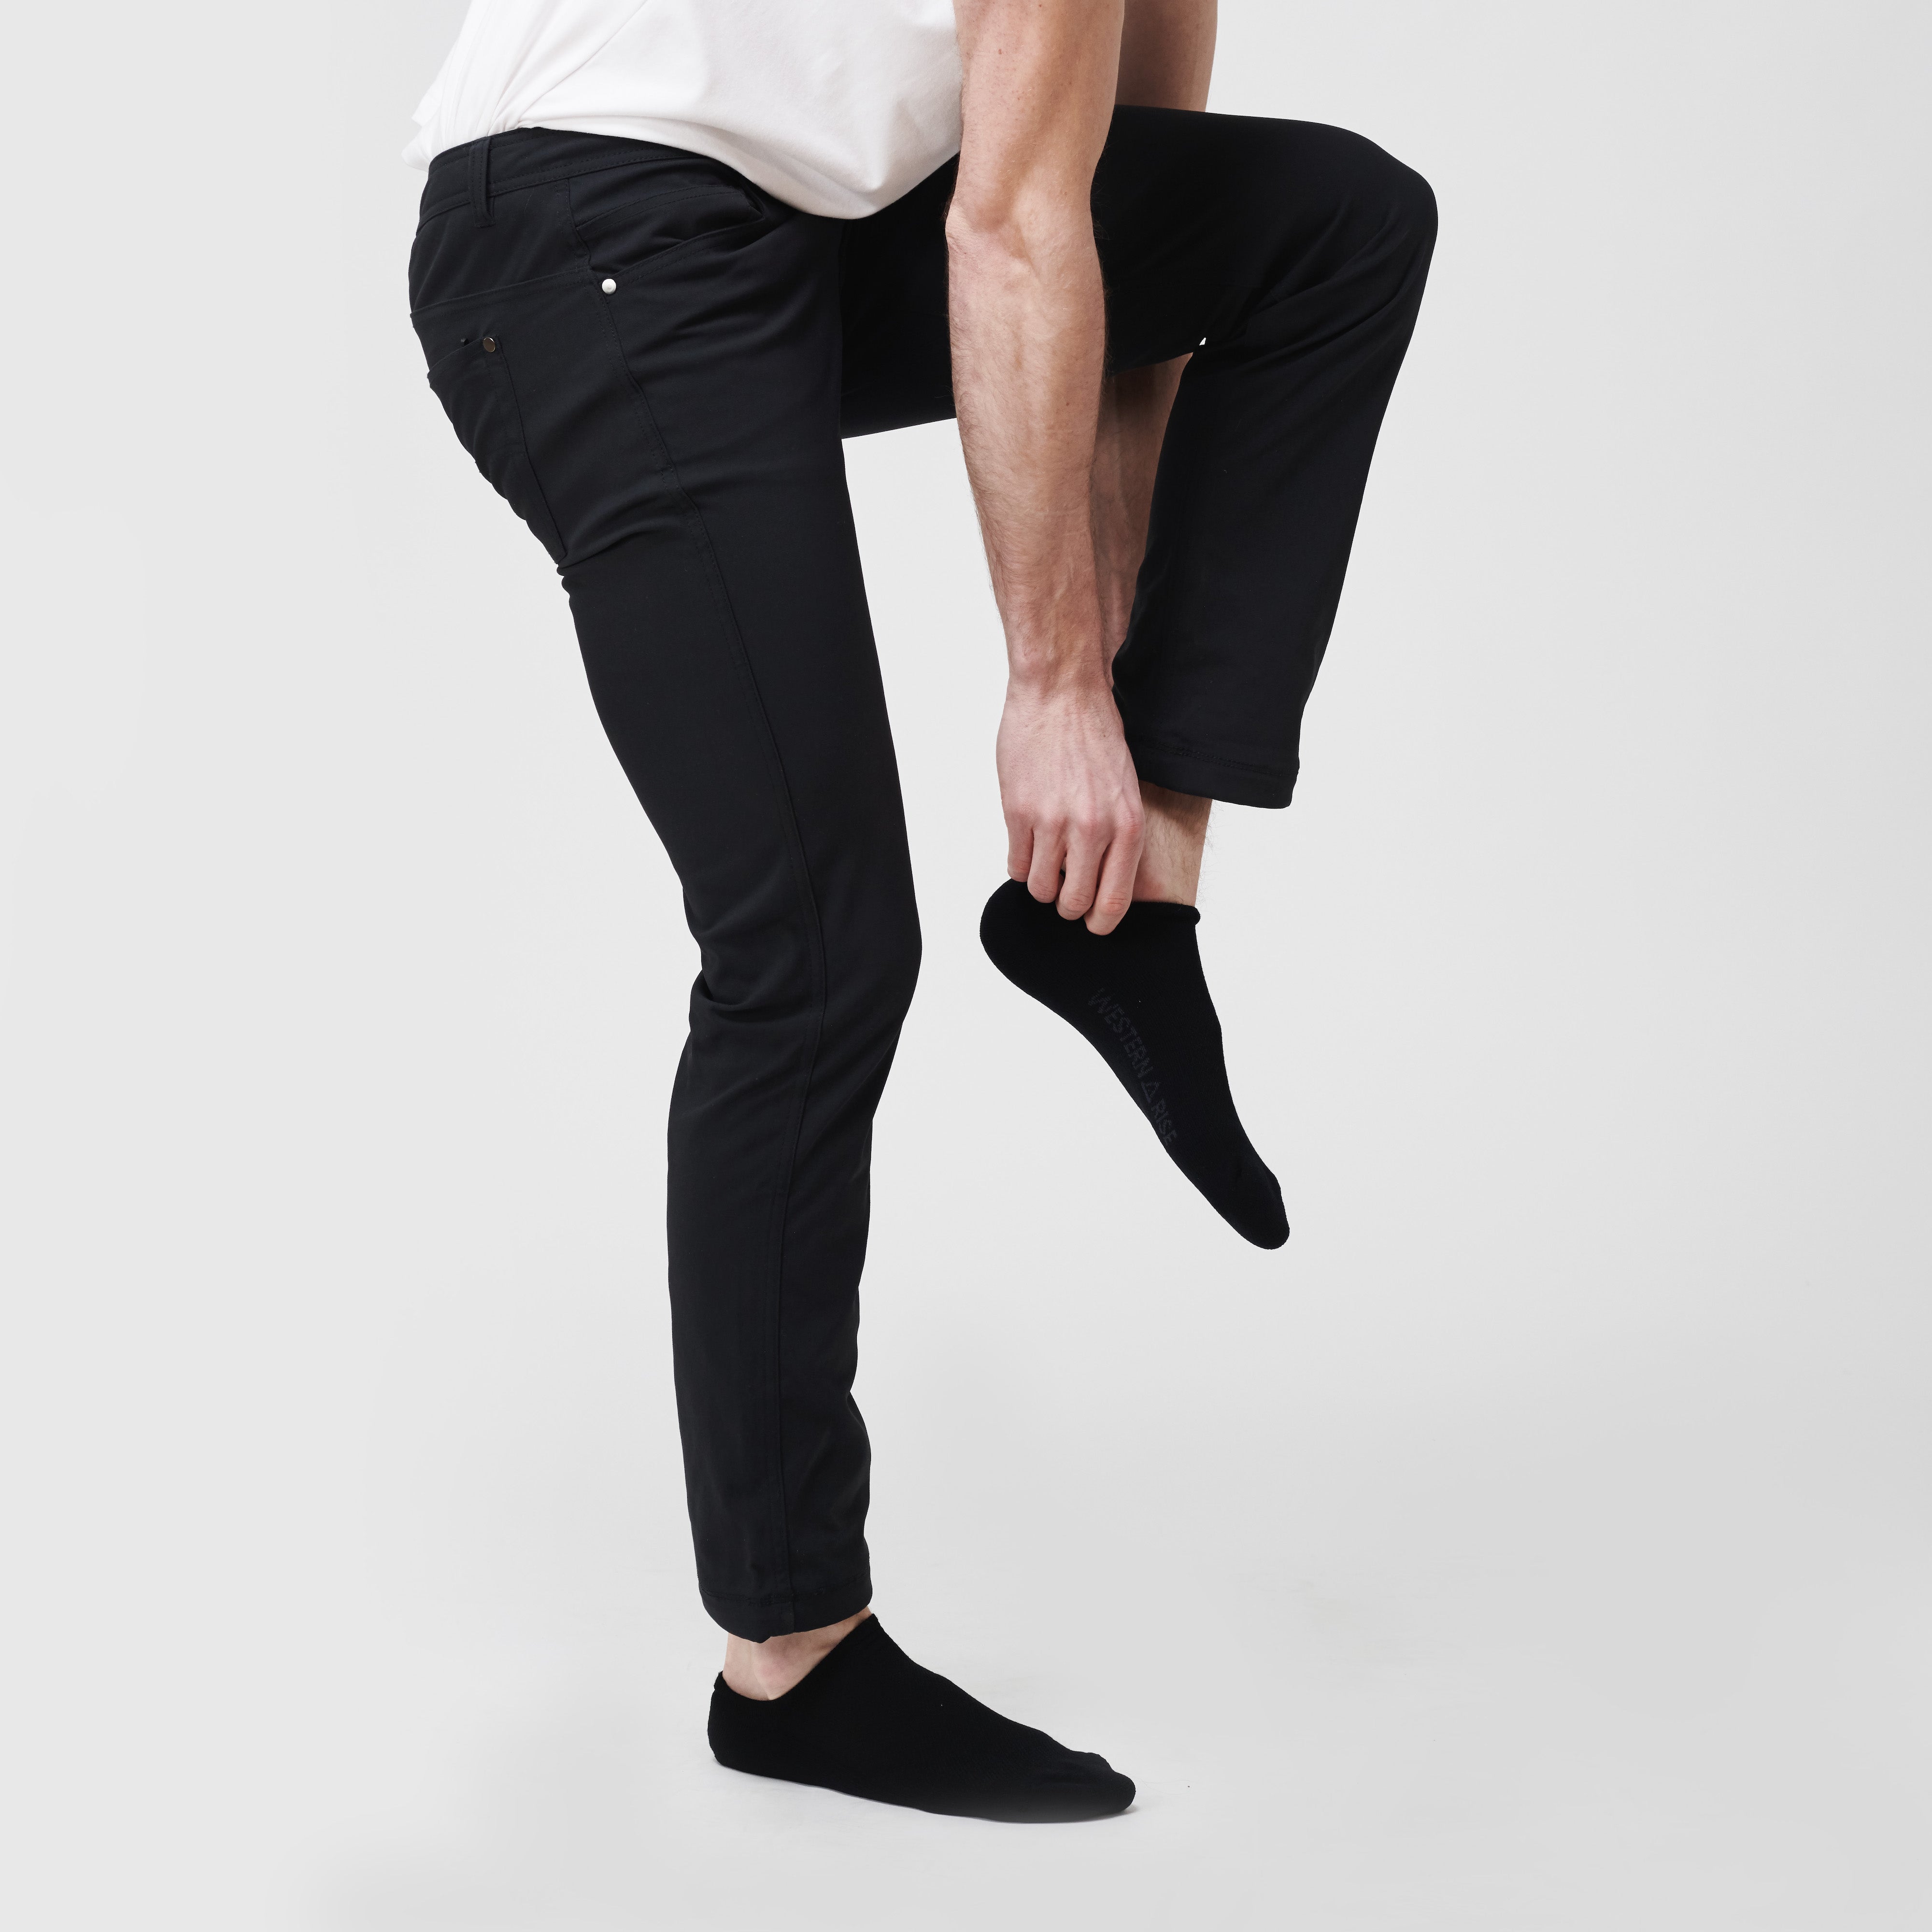 StrongCore Merino Socks - Low - Black
